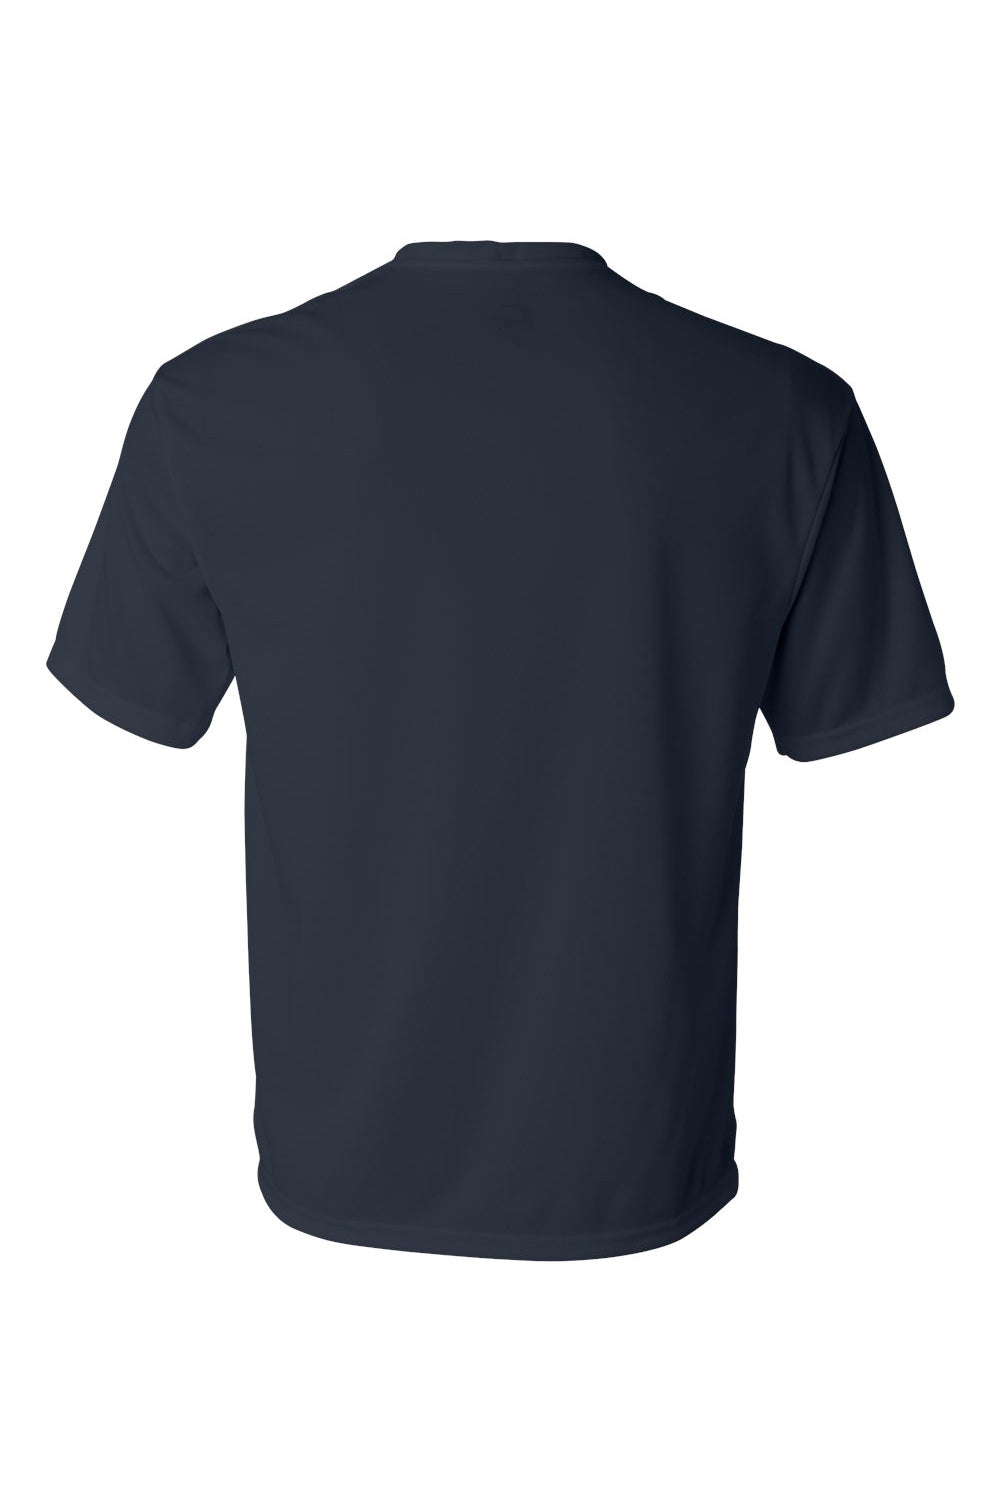 C2 Sport 5100 Mens Performance Moisture Wicking Short Sleeve Crewneck T-Shirt Navy Blue Flat Back